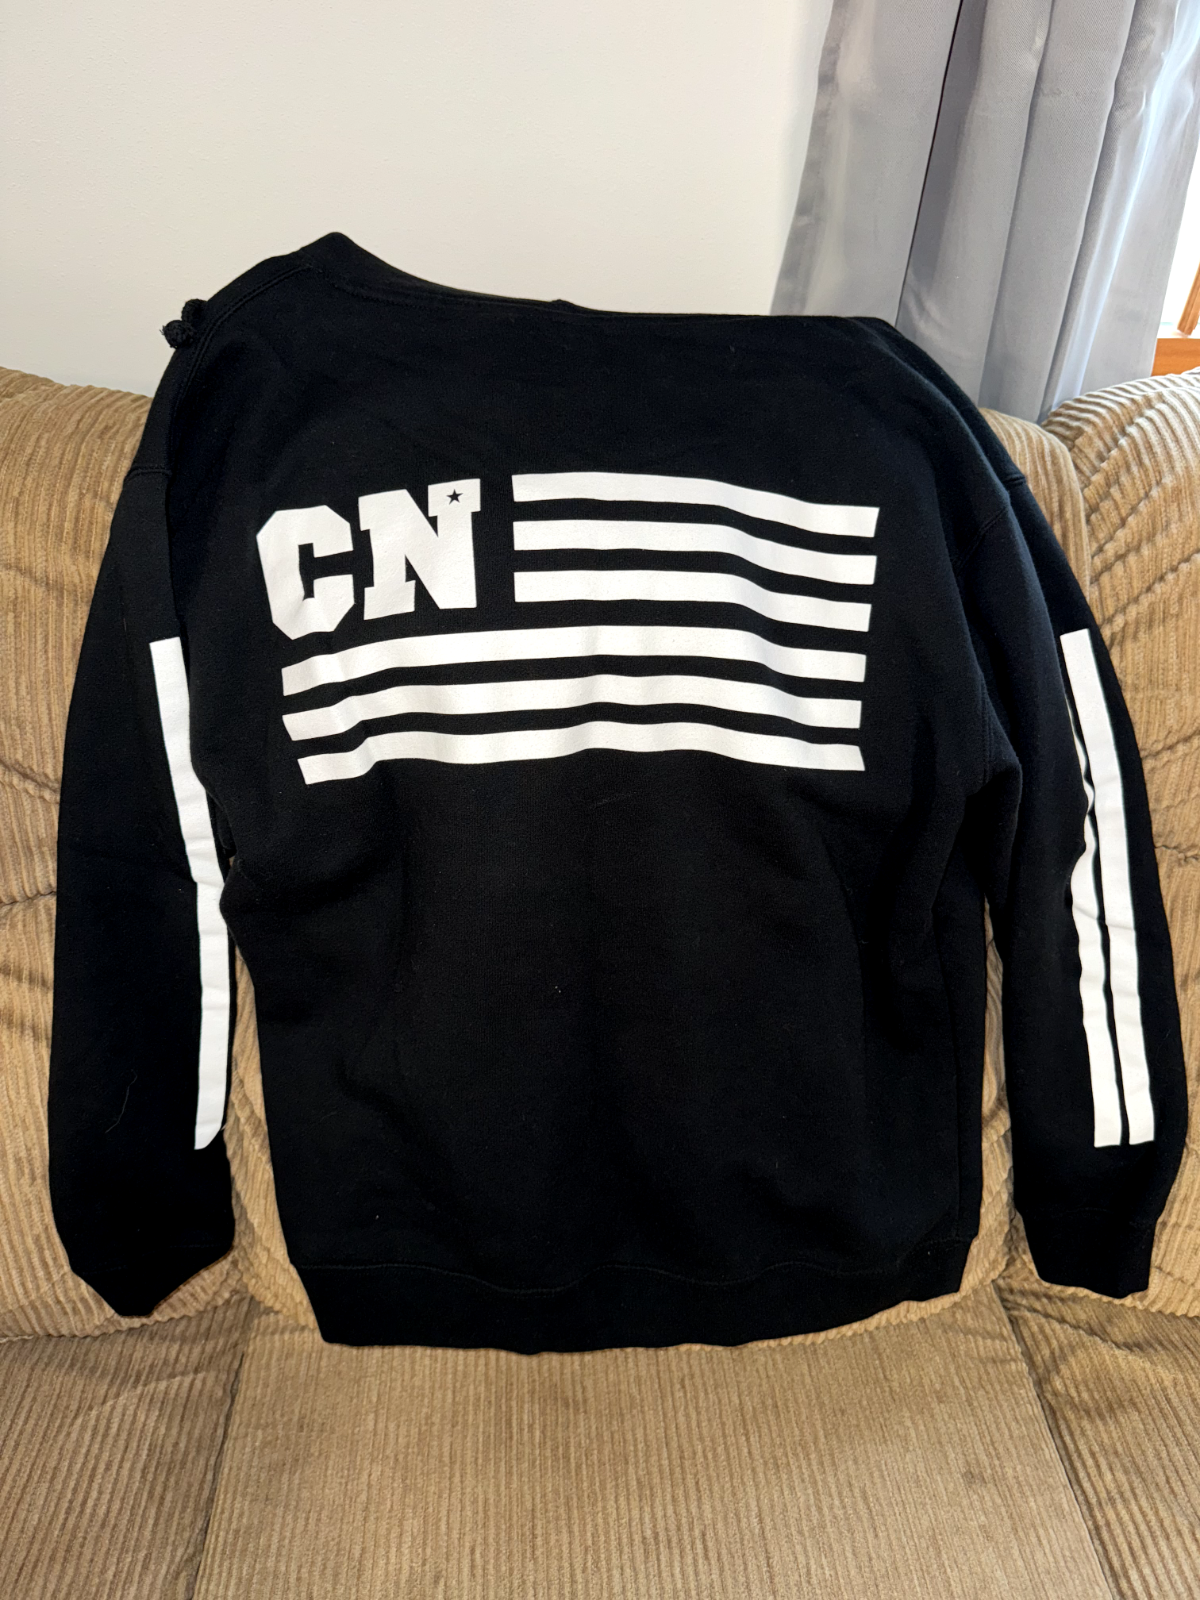 Black “Casey Neistat” Merch Sweatshirt | YouTuber Vlogger | L | eBay